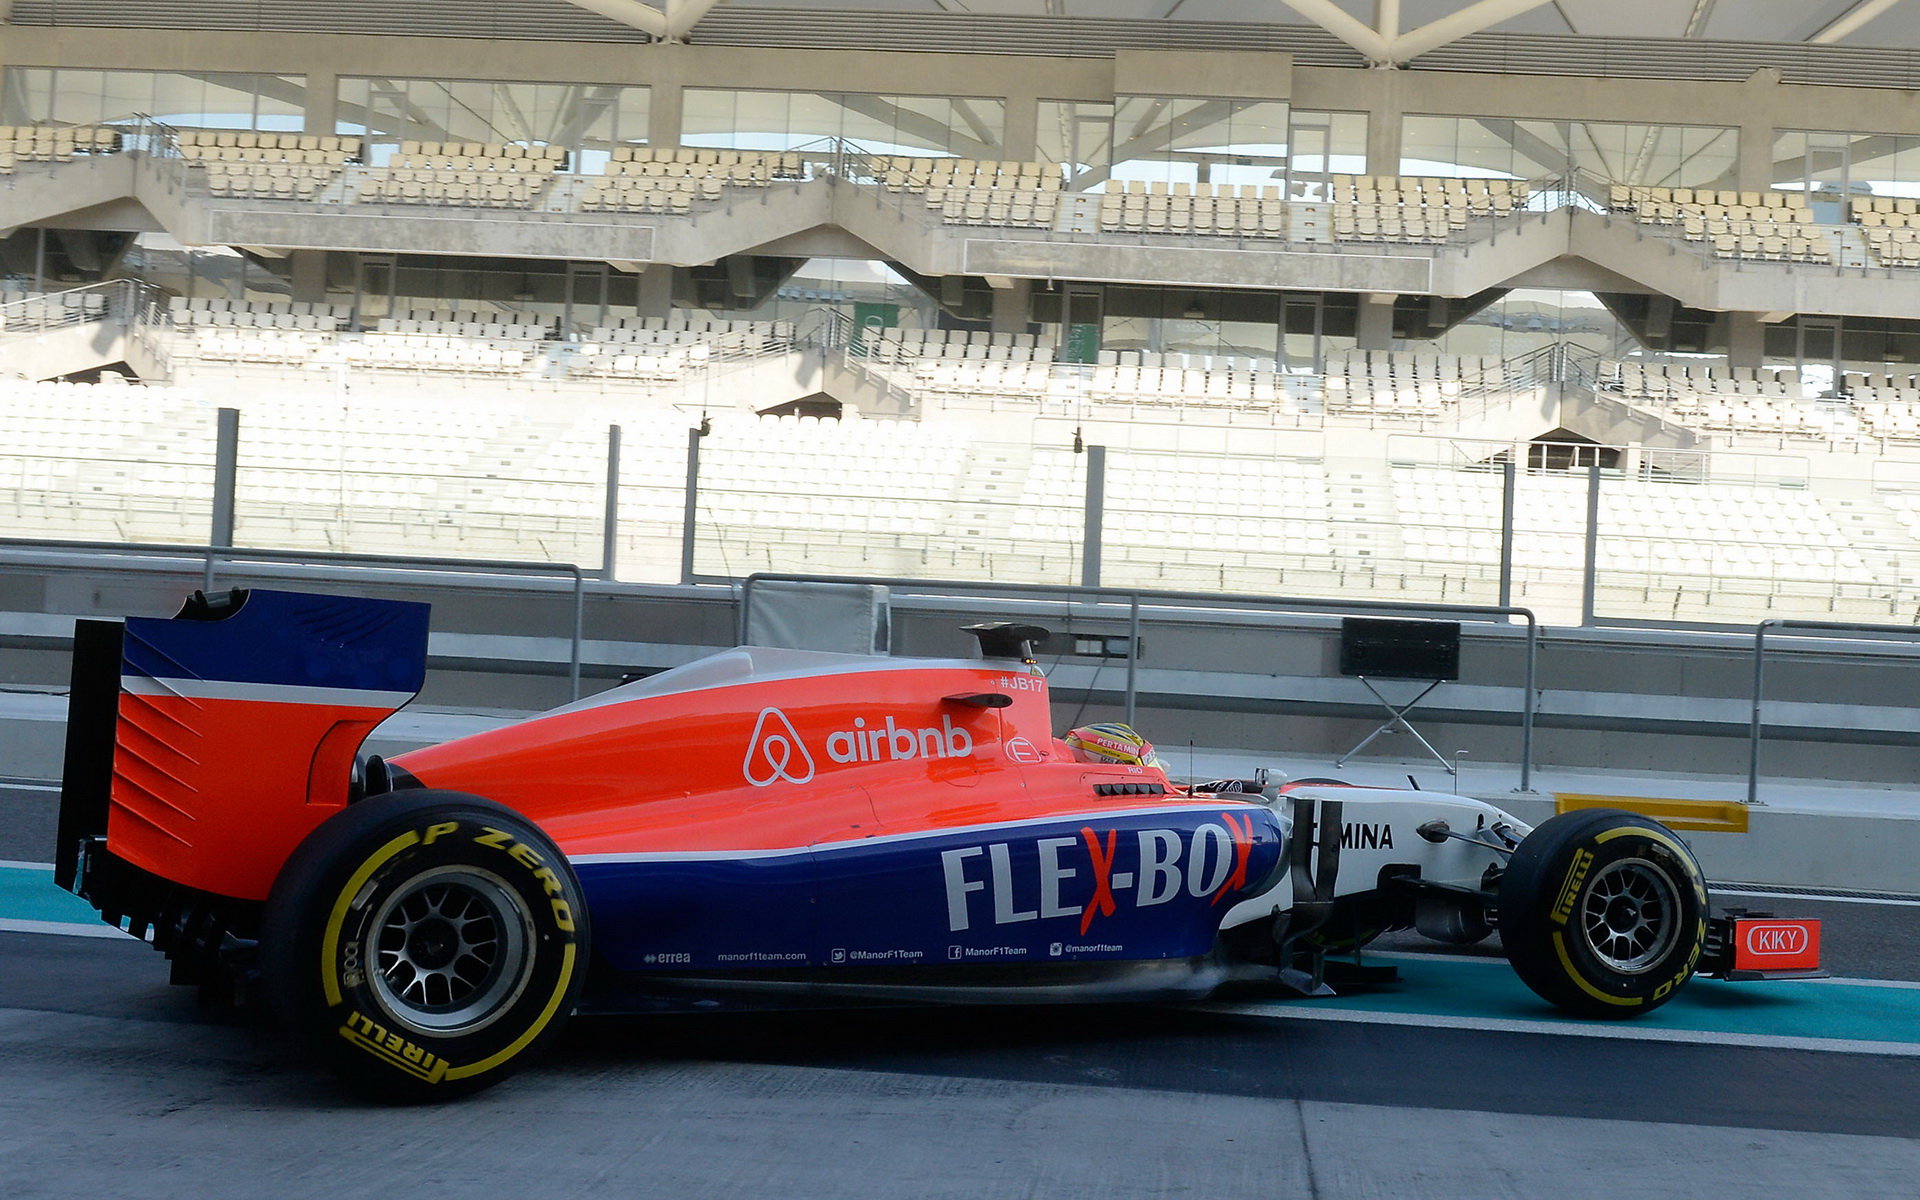 Rio Harjanto při Pirelli testech v Abú Zabí, uvidíme ho i v závodním režimu?